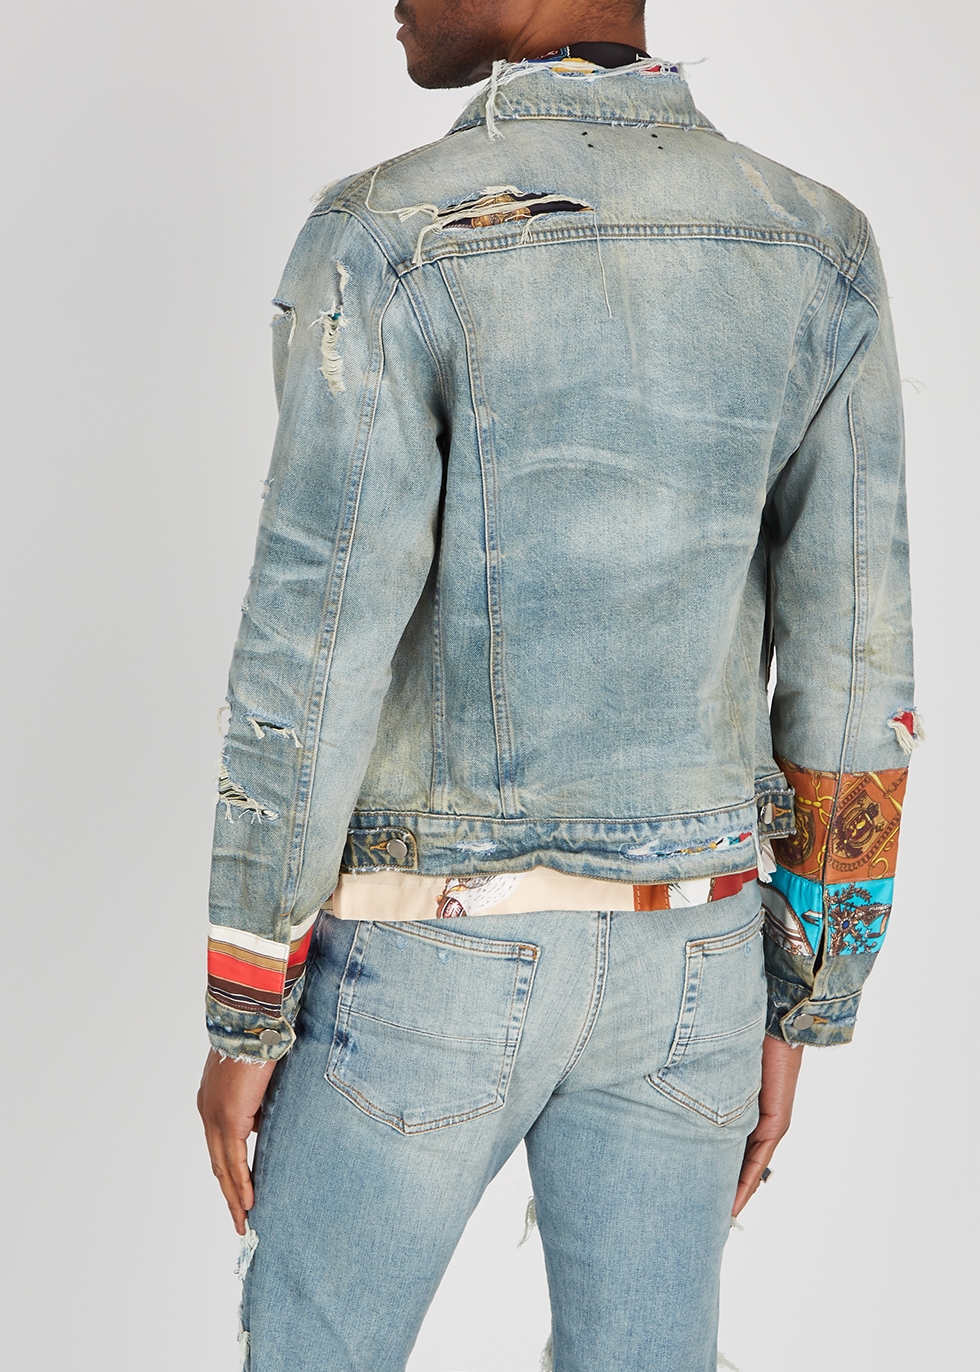 amiri jeans jacket